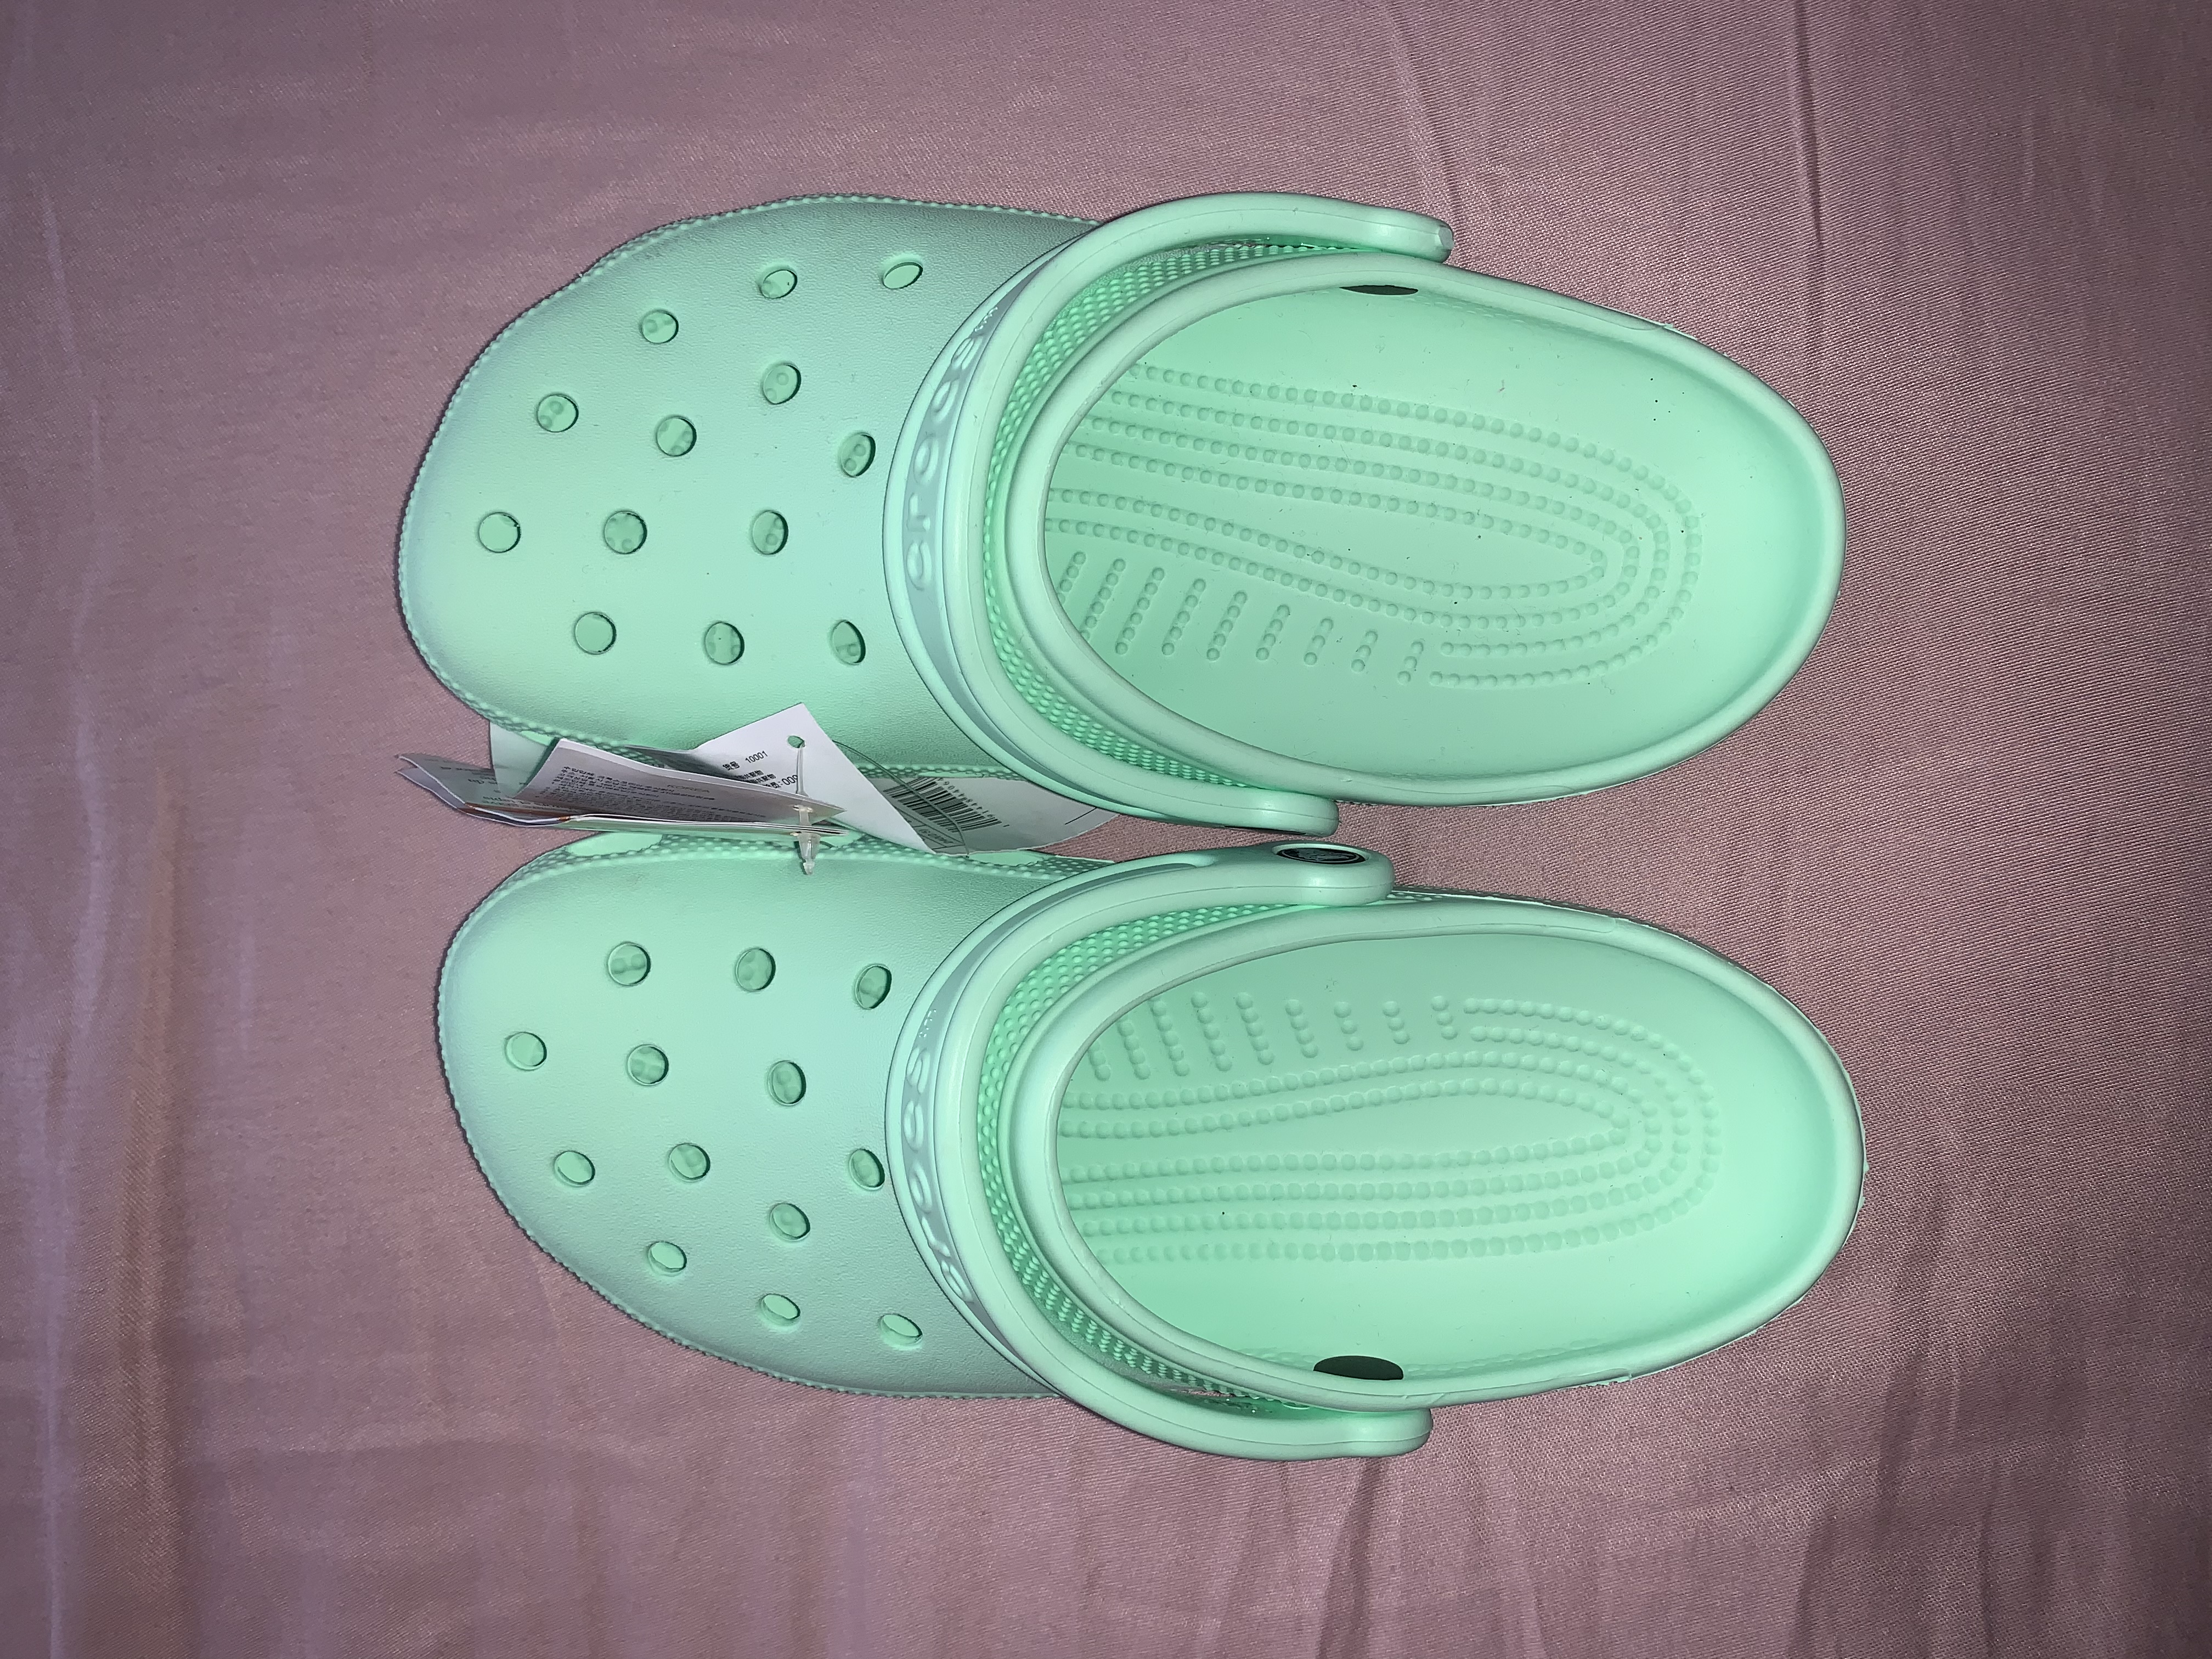 zapatos unisex - Crocs color azul turquesa/verde